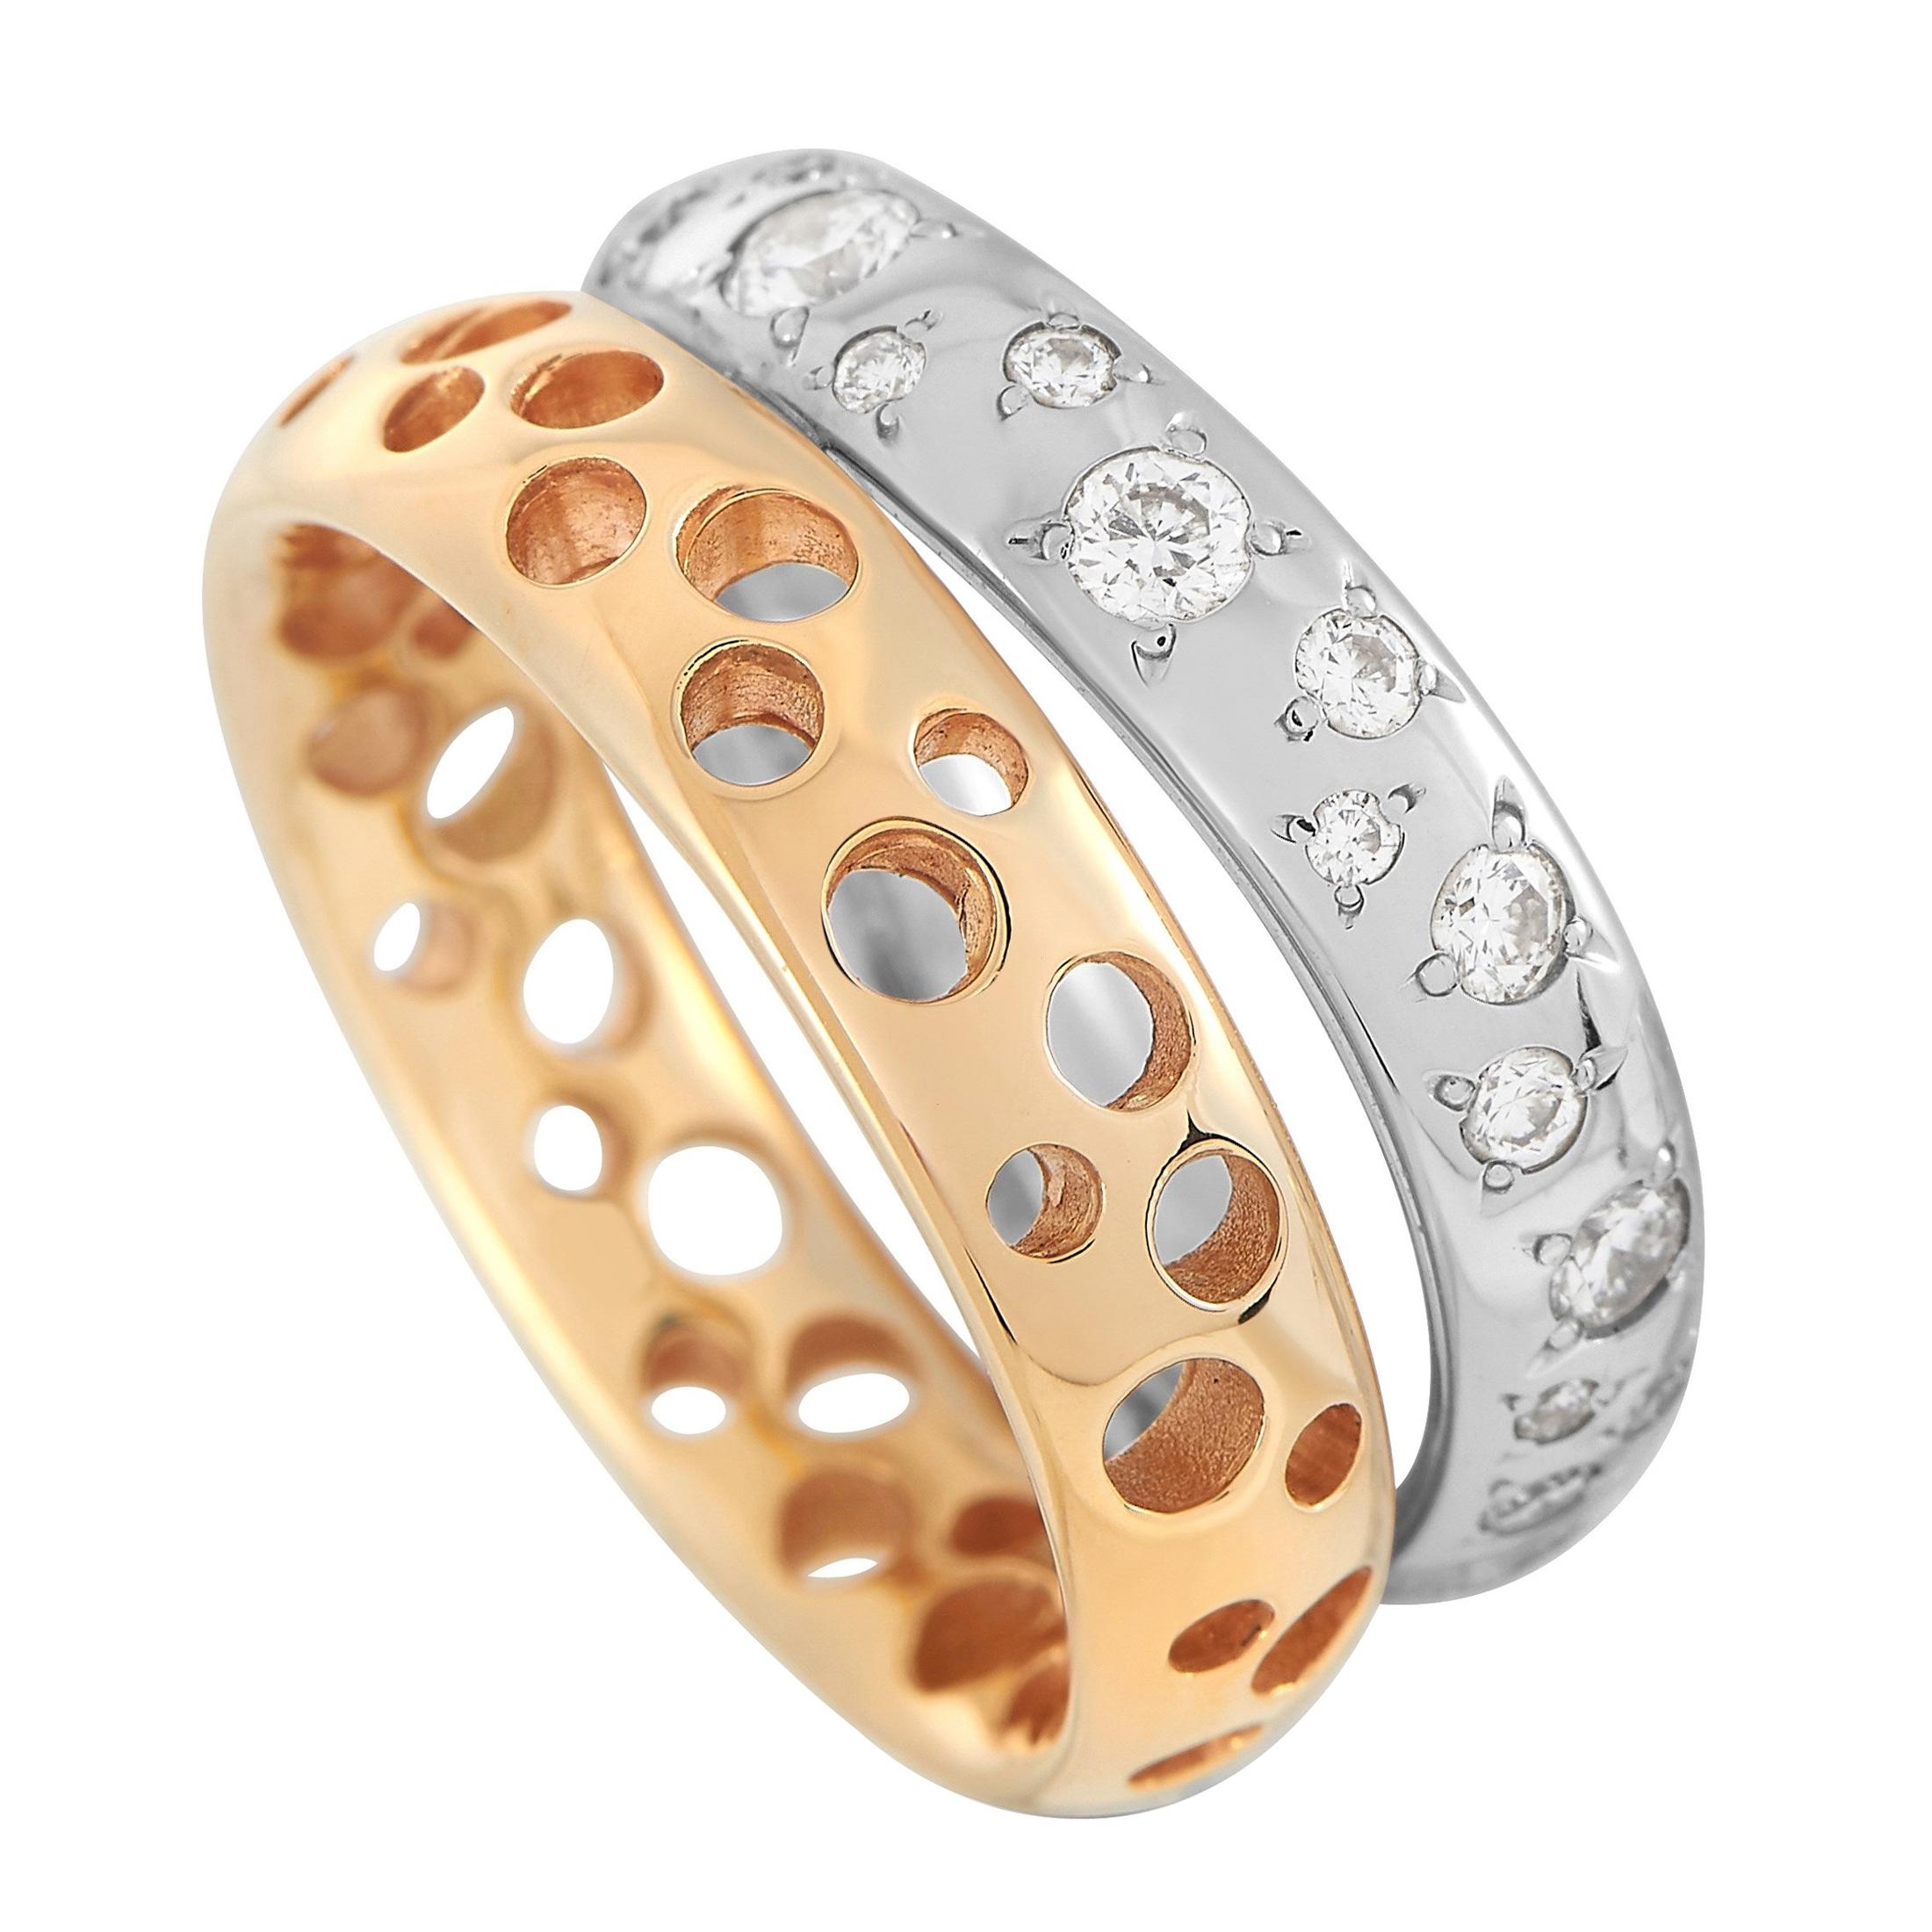 Pomellato Milano 18k Rose Gold and White Gold 0.81 Ct Diamond Duo Ring